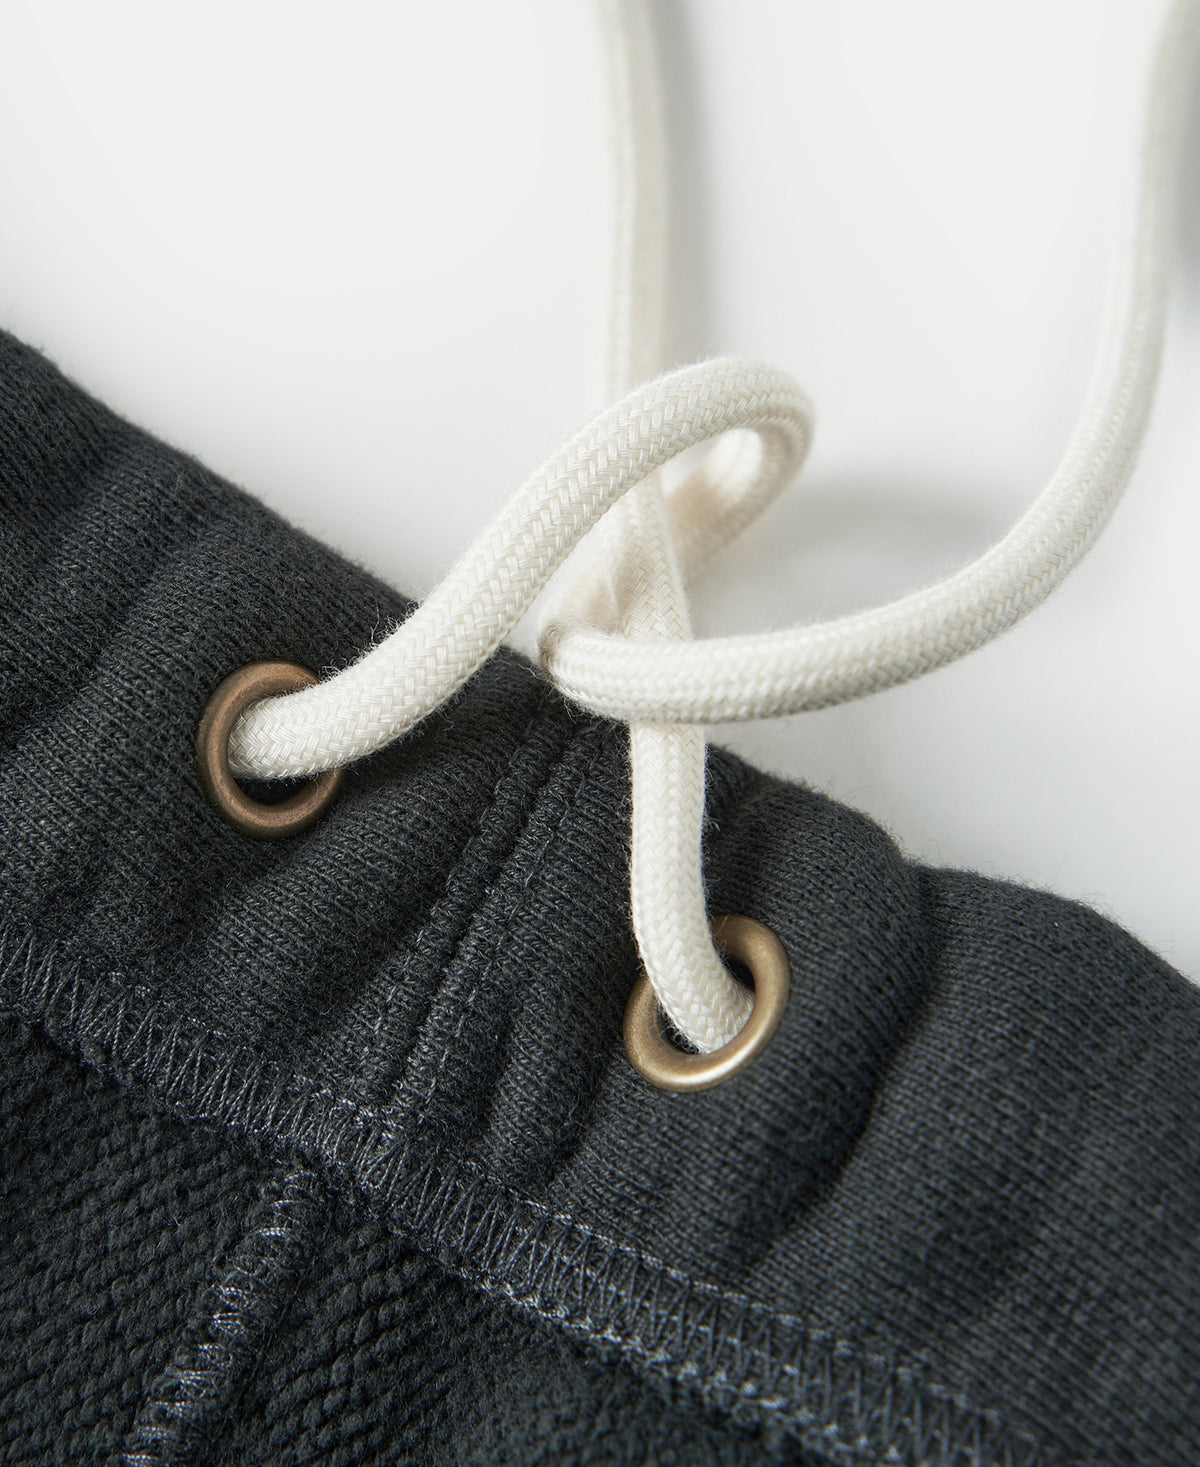 1950s 20.5 oz Terry Cloth Reverse Weave Sweatpants - Black